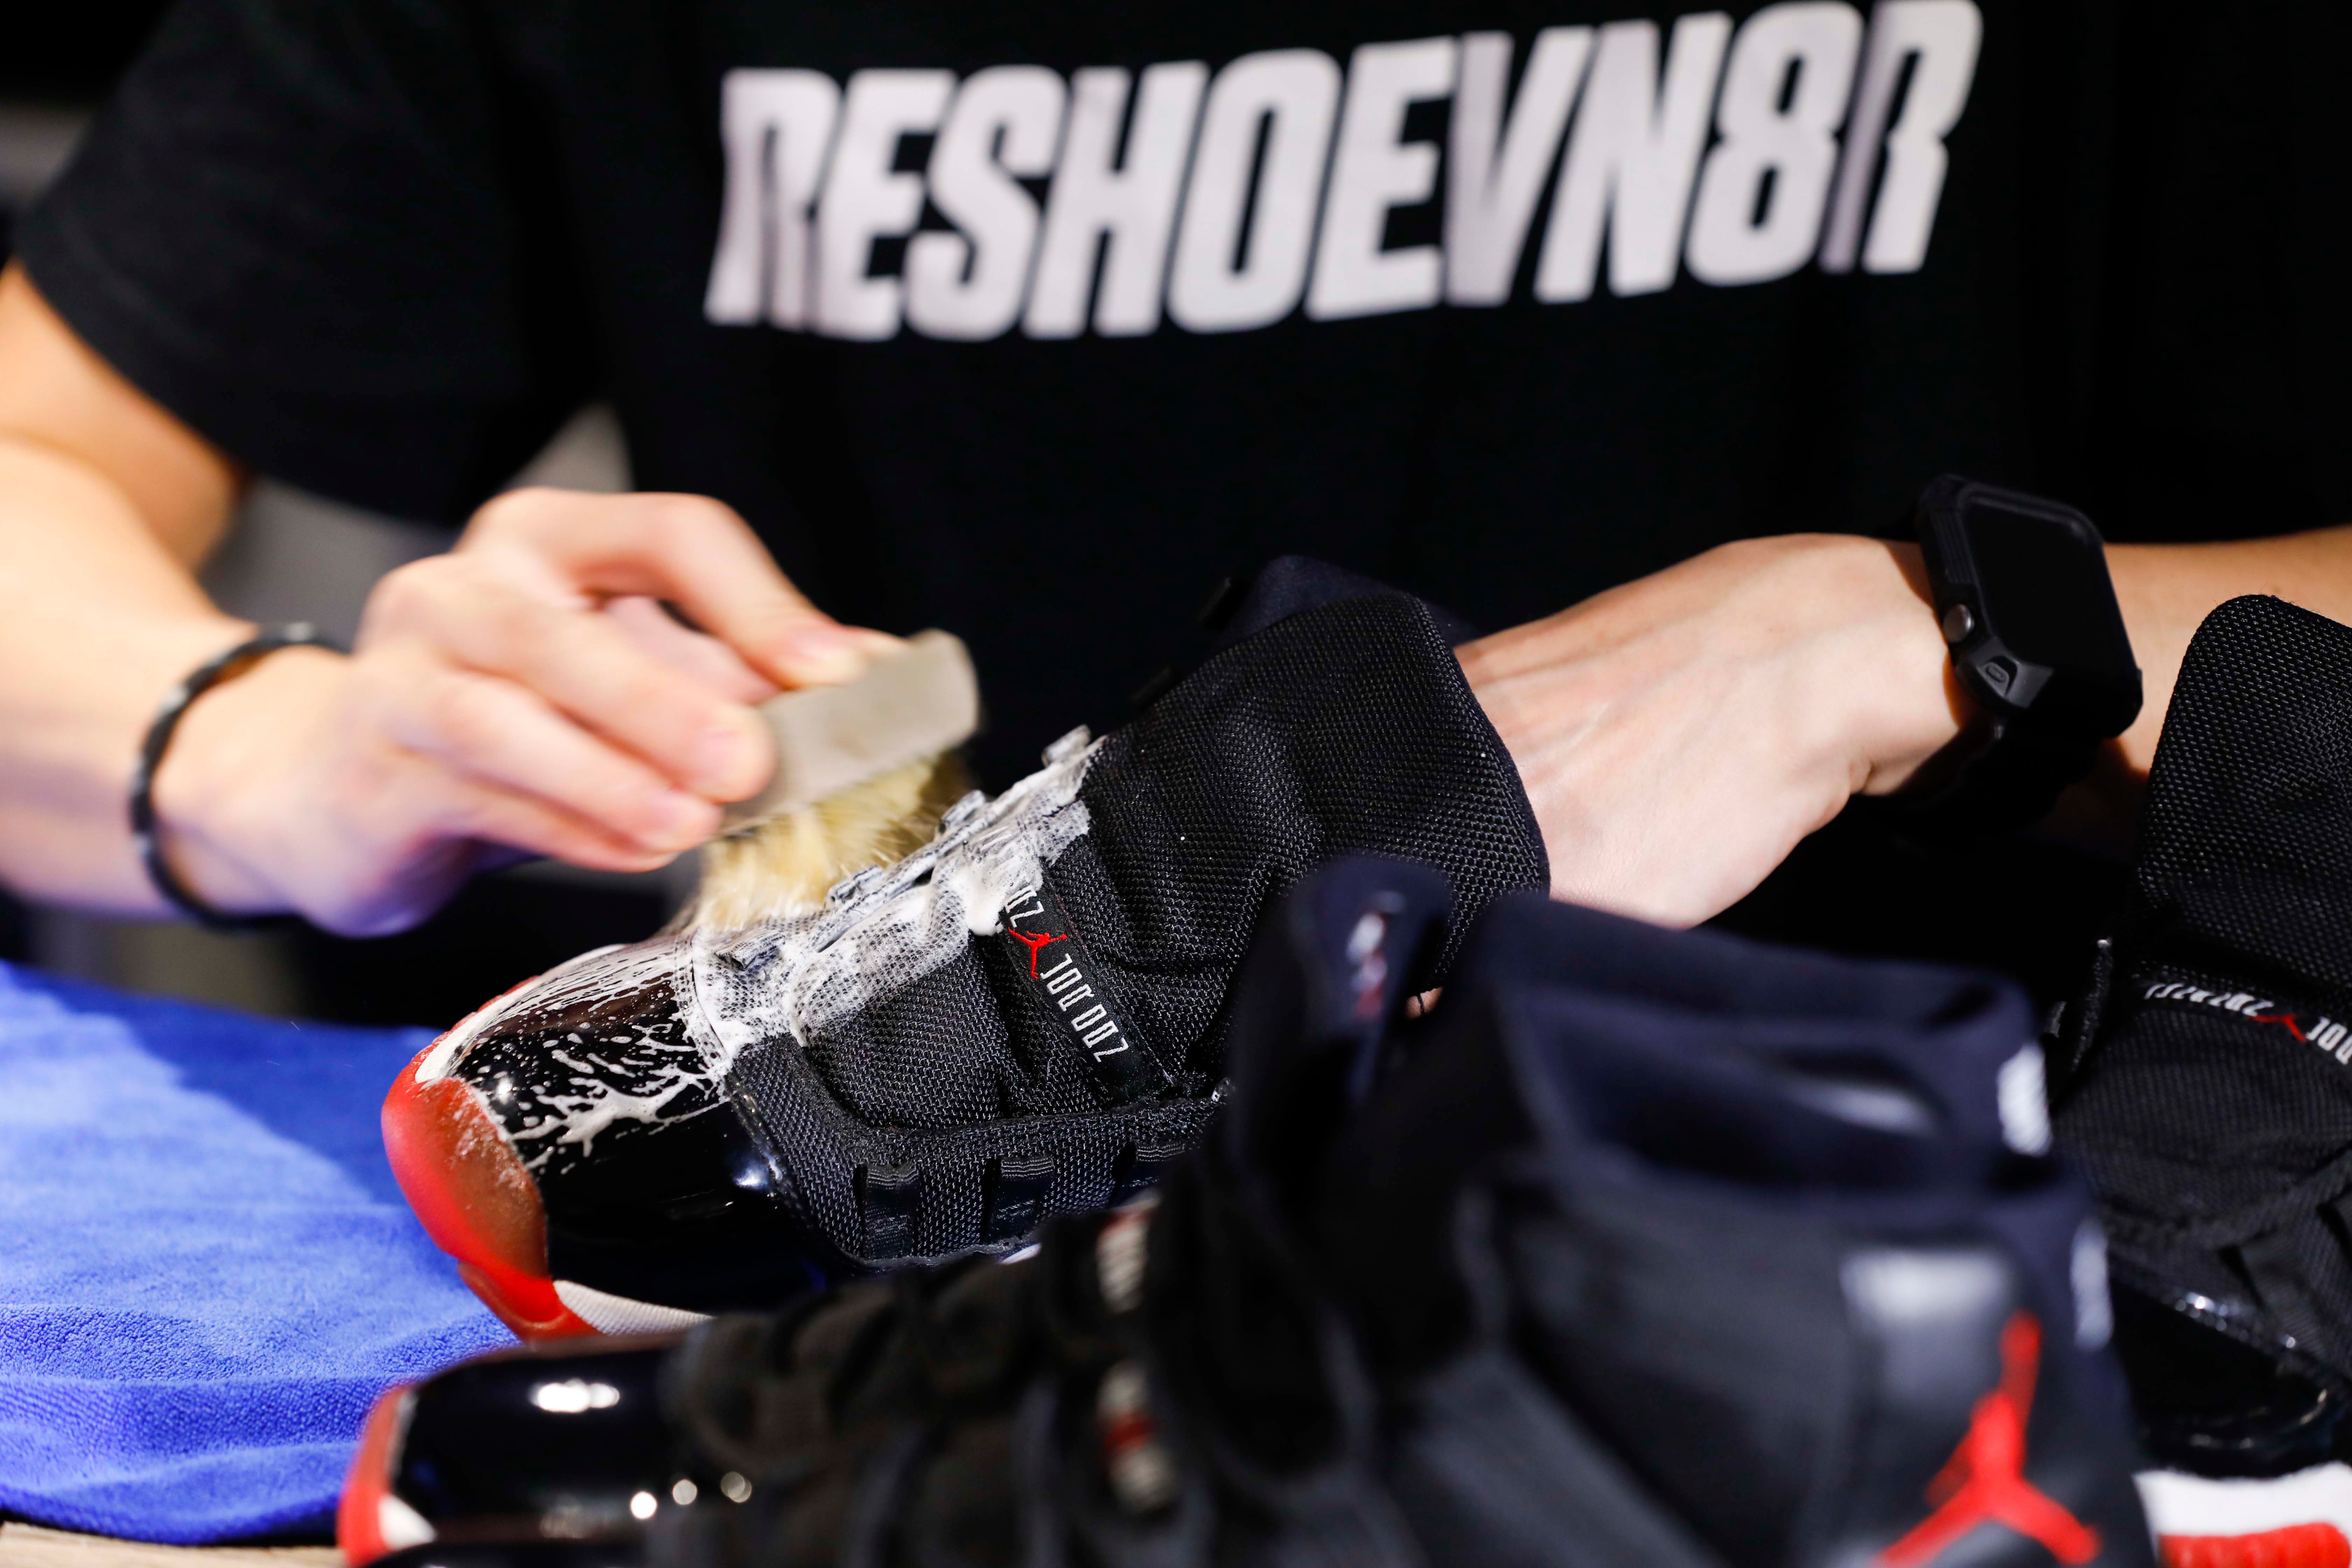 Reshoevn8r 於香港推出點對點登門收發球鞋護理服務